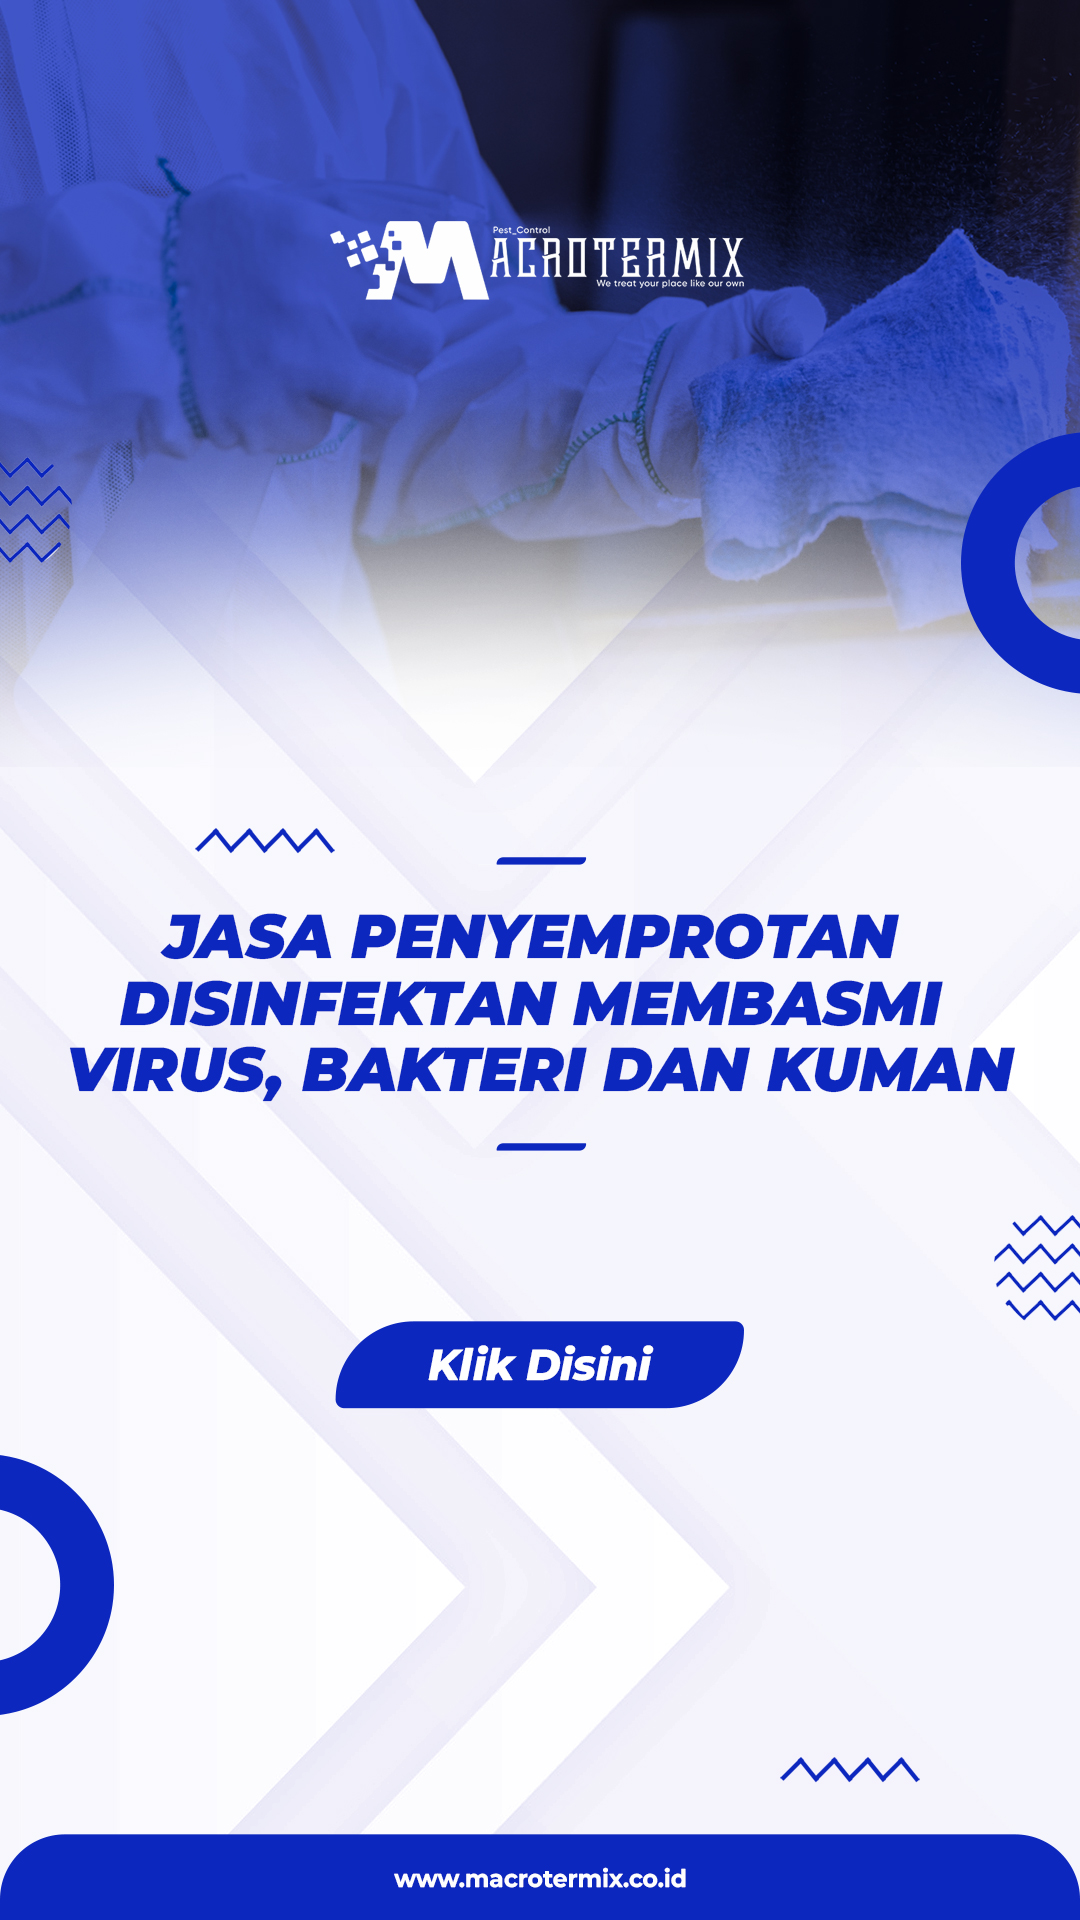 Jasa Disinfectant Jakarta, Jasa Anti rayap jakarta, jasa pest termite control jakarta